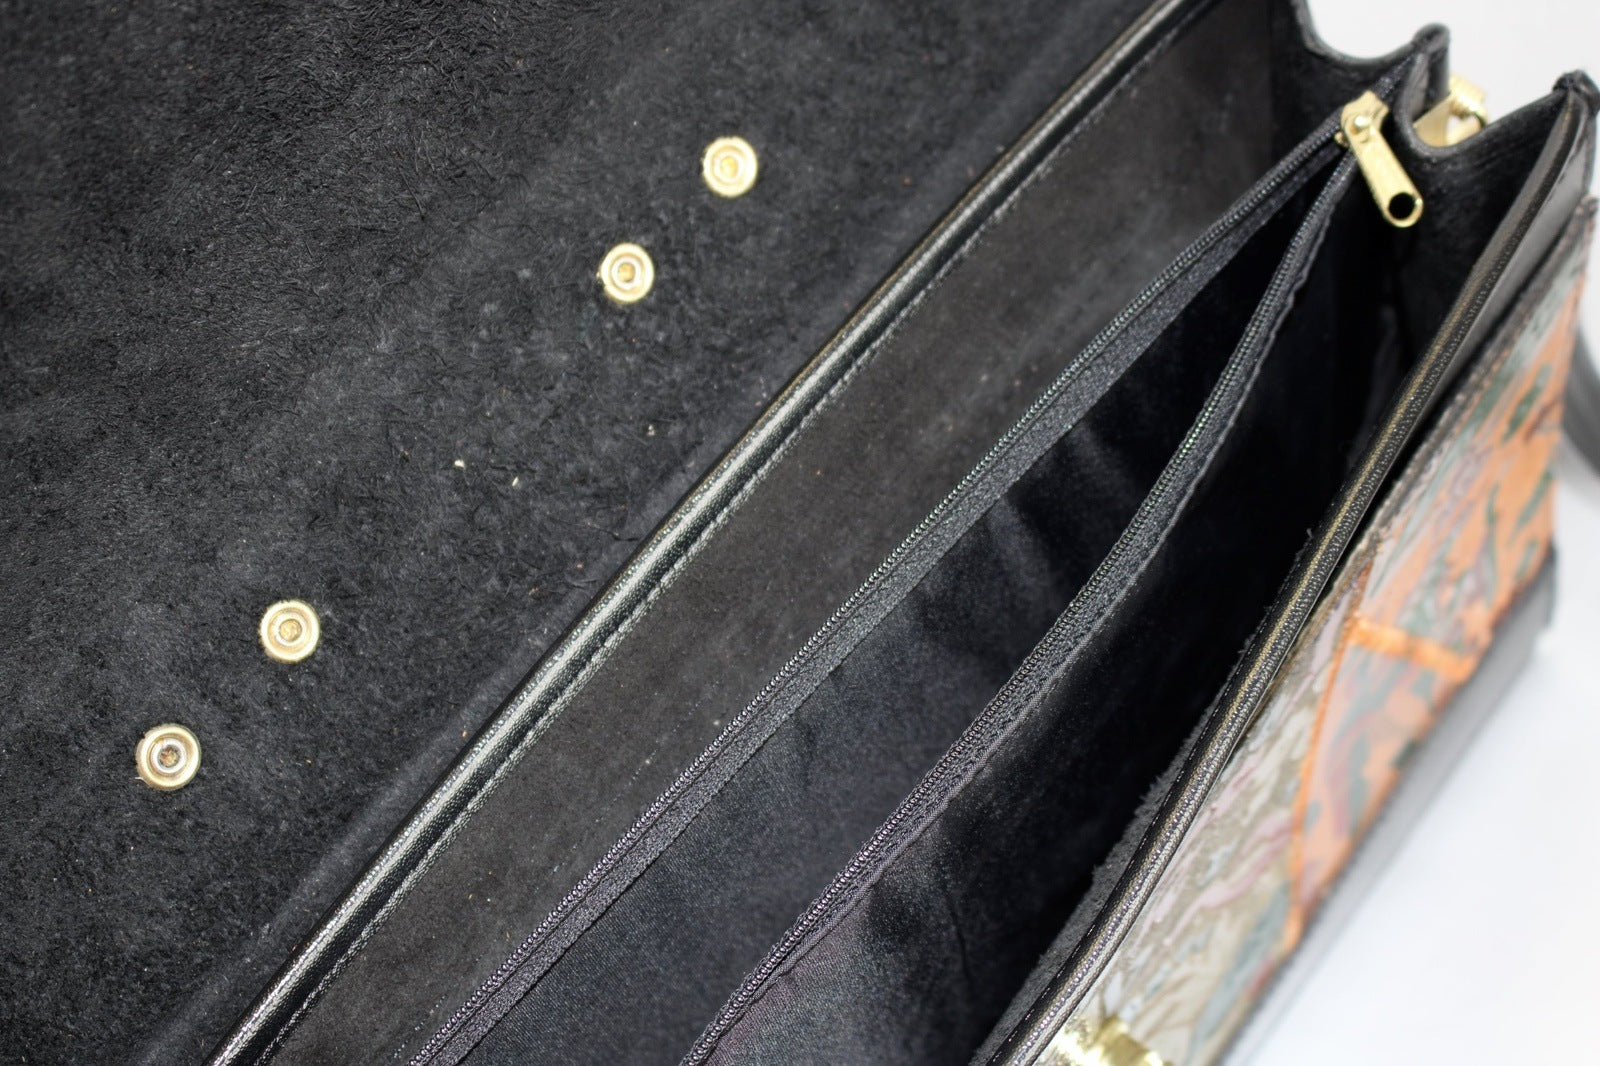 Princess Leather Briefcase Purse Bag Vintage Accessories